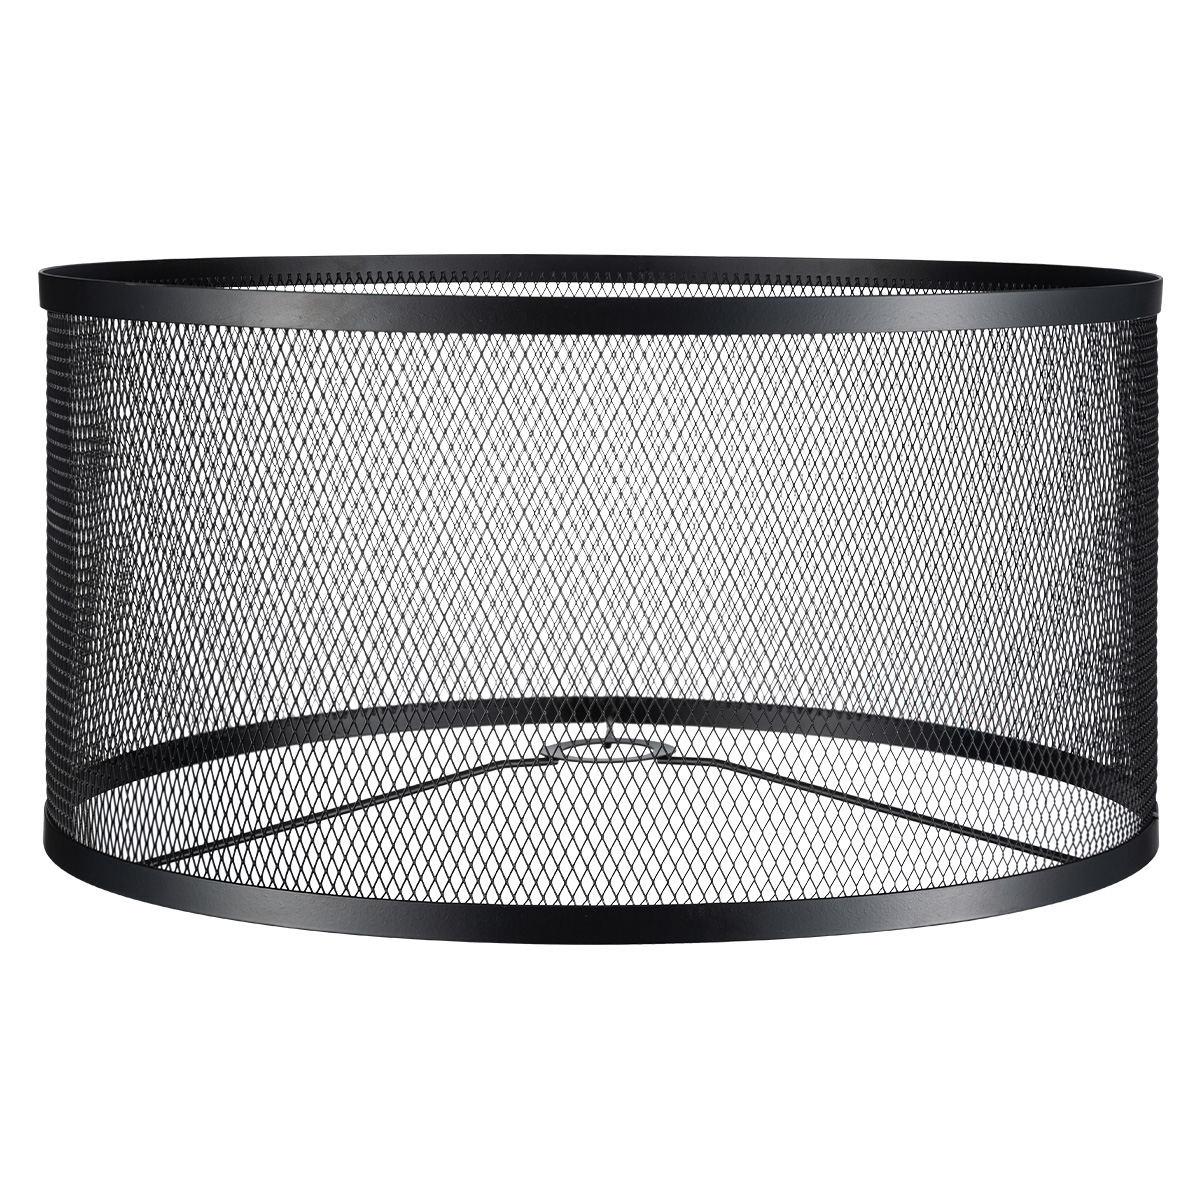 Tangla lighting - TLS7646-50BK - Decorative Lampshade - metal wire mesh in black - industrial black - Φ50cm - E27